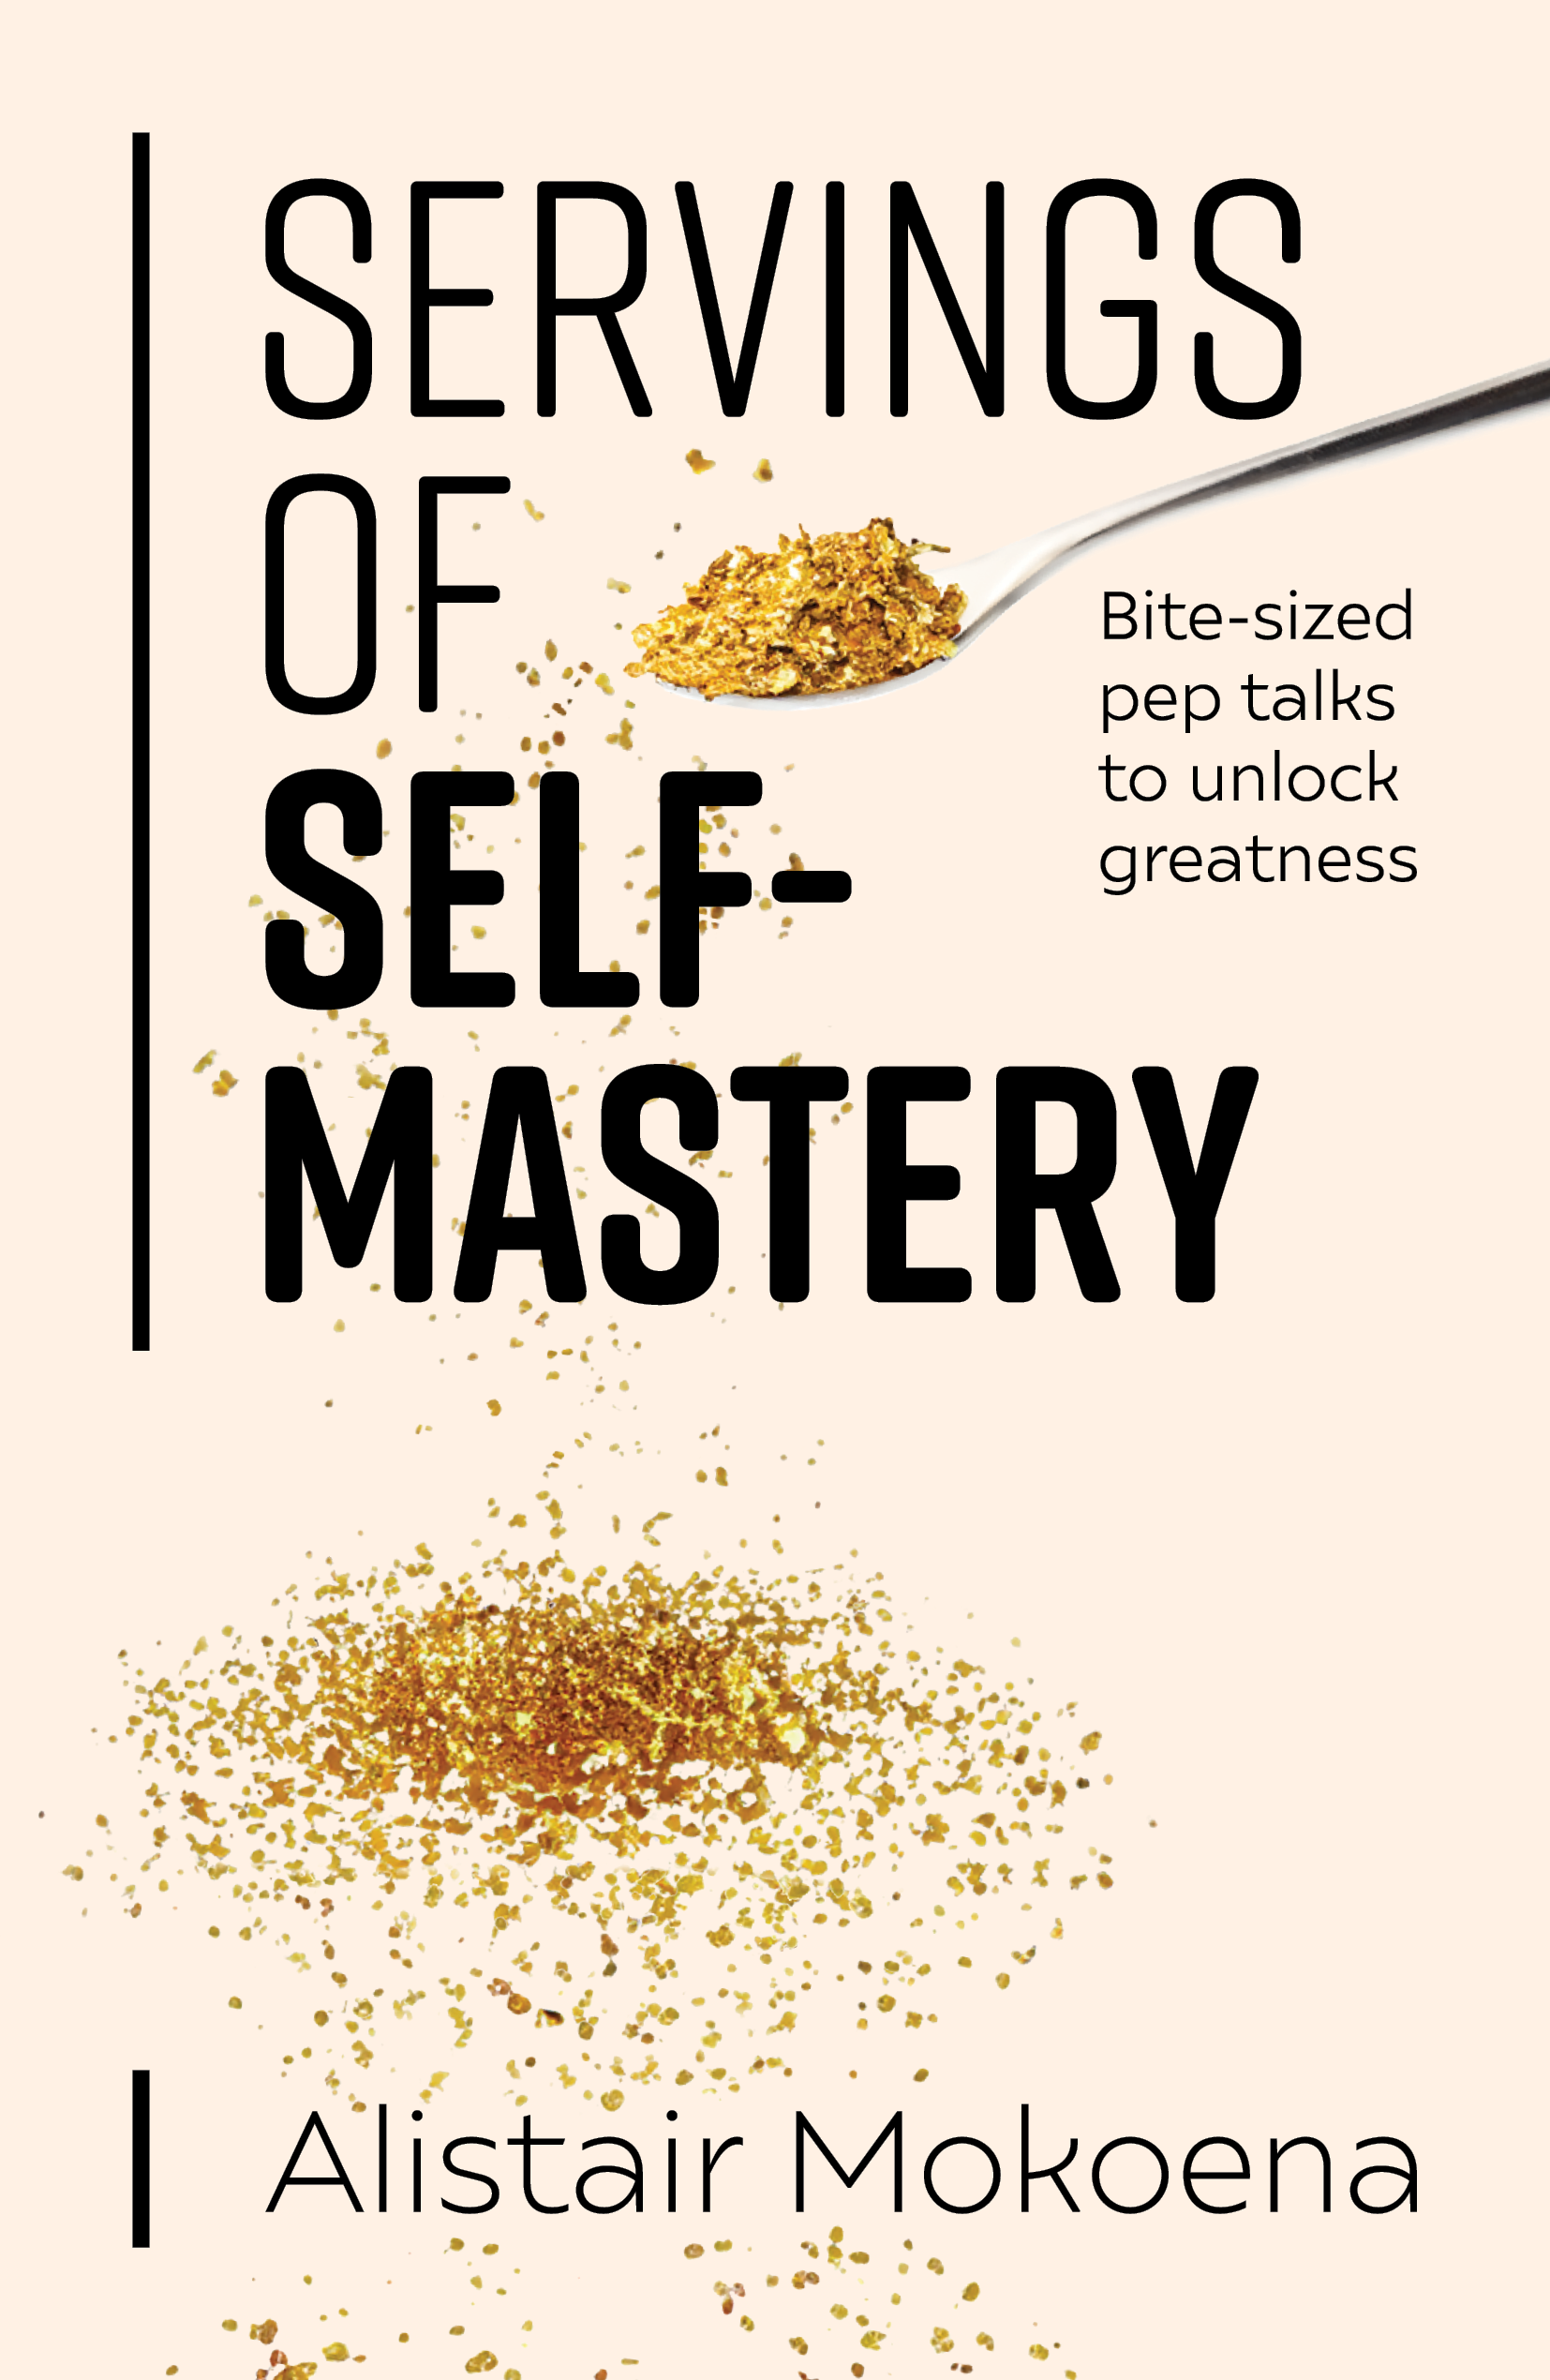 Servings of self mastery bookcover by alistair mokoena